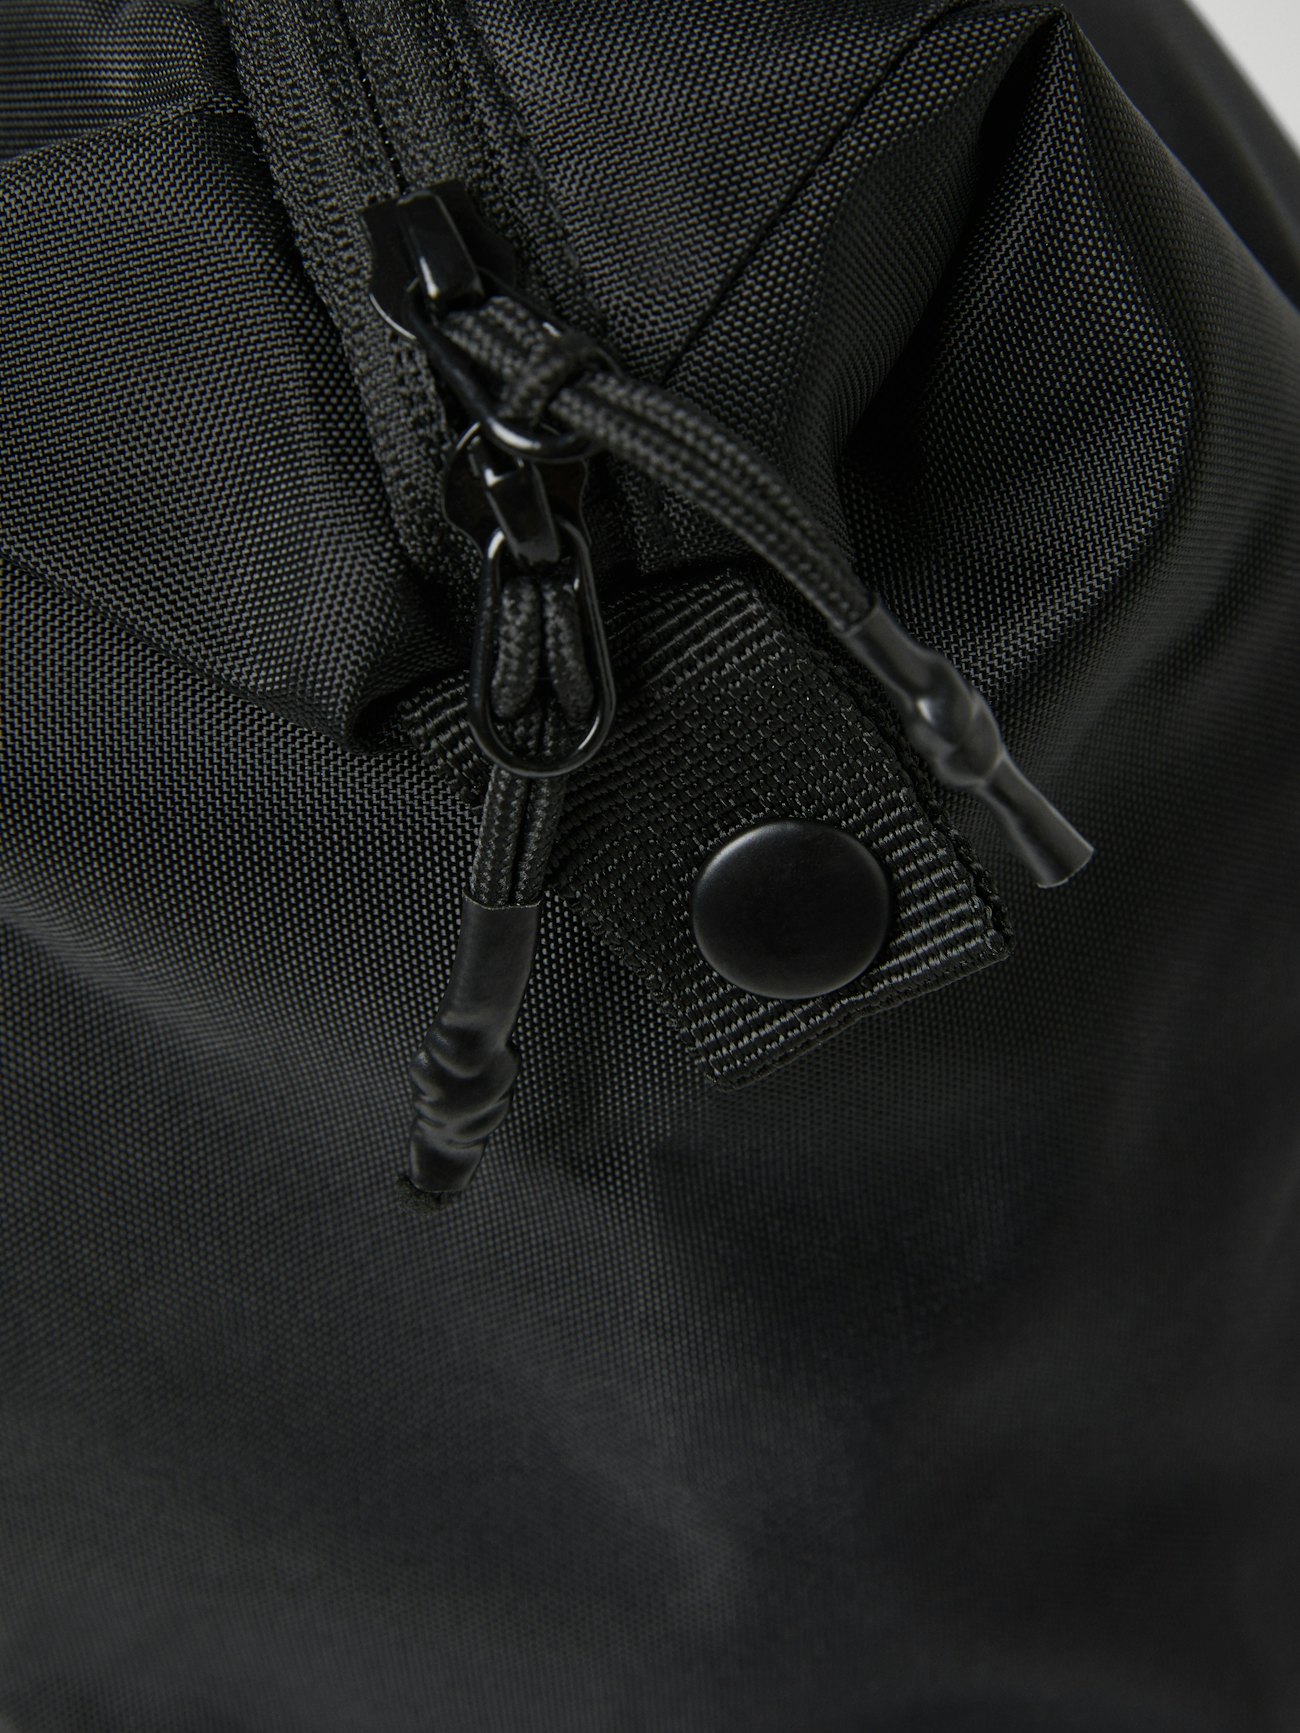 Nike Sportswear UNISEX - Sac bandoulière - black/anthracite/noir 